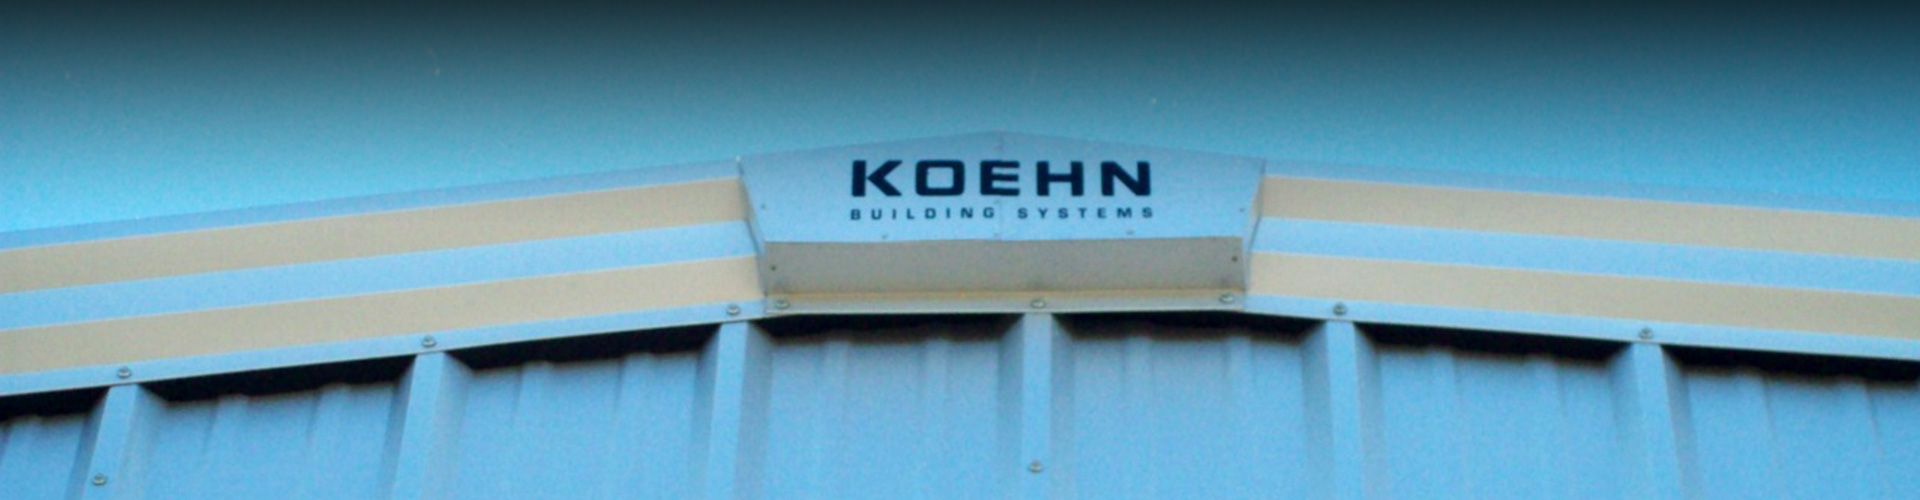 koehn building systems logo on metal